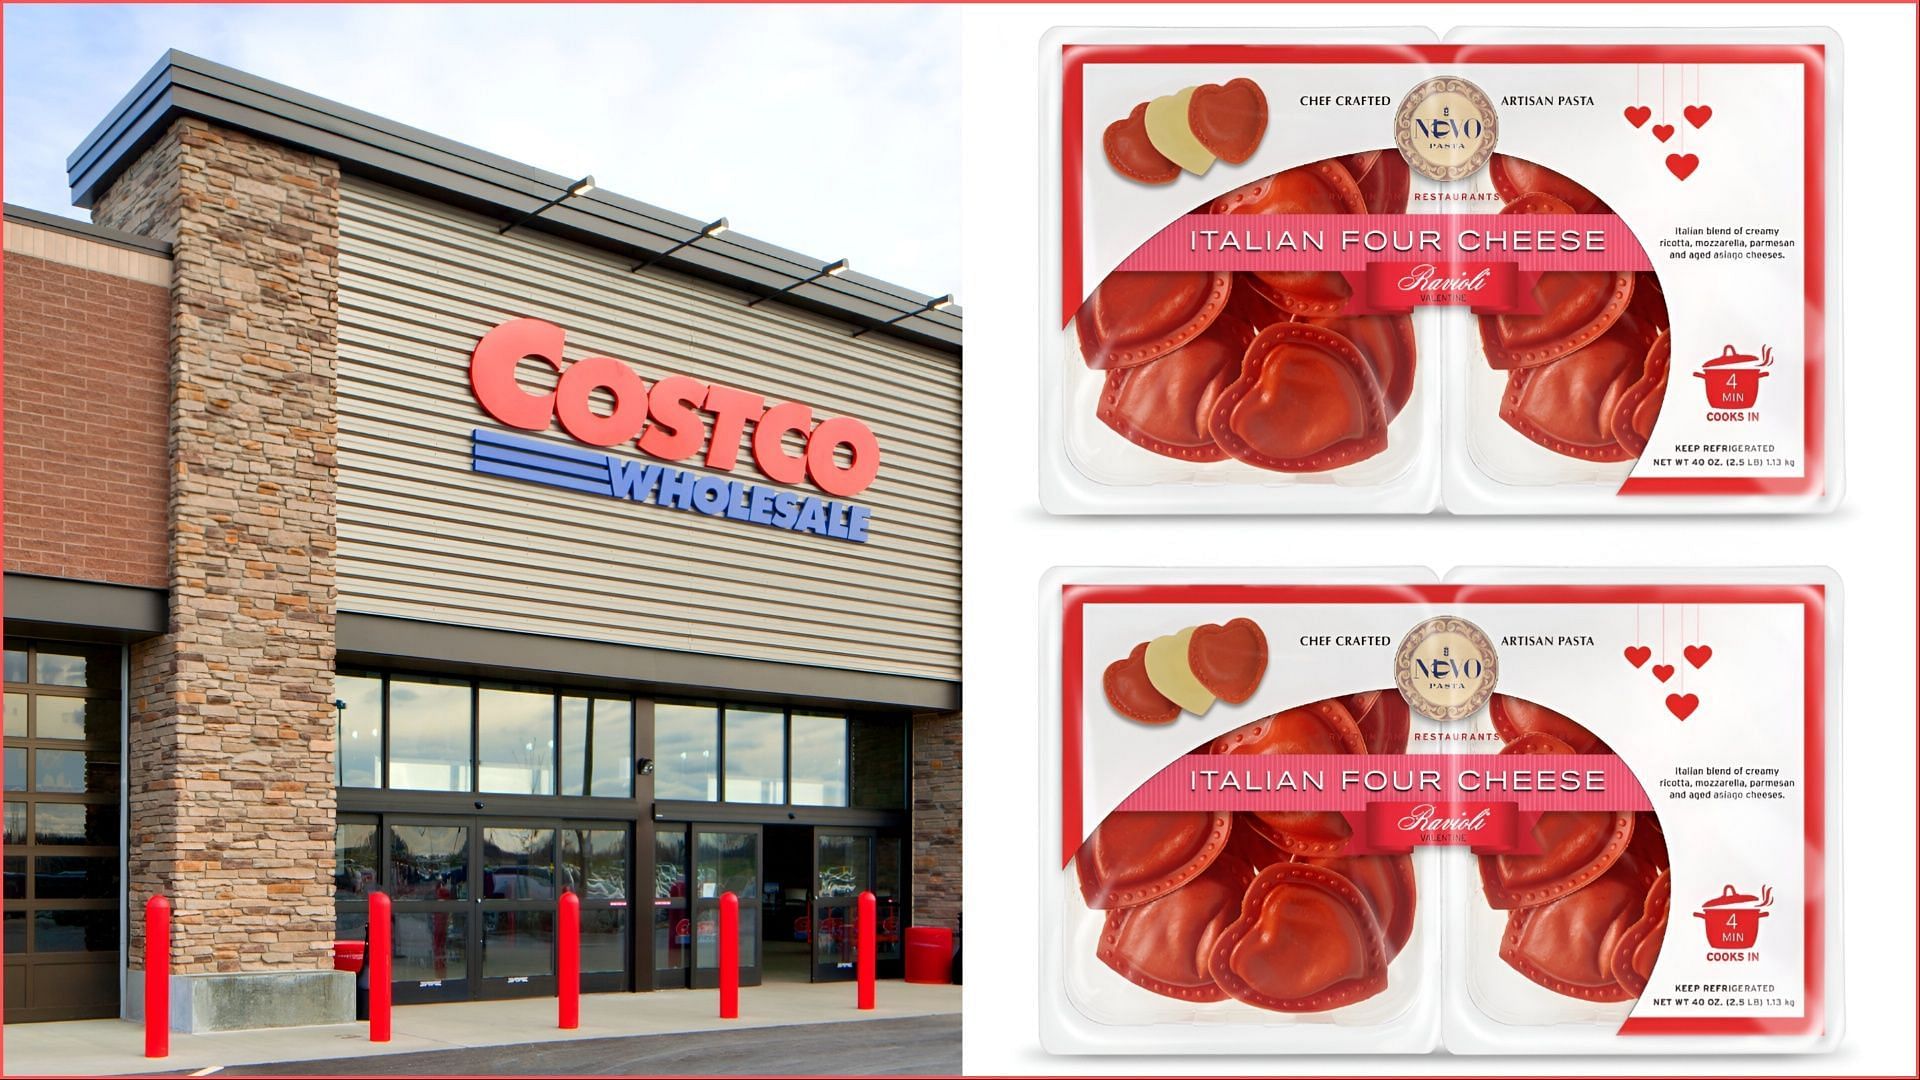 Costco starts selling heart-shaped Nuovo Pasta Heart Raviolis (Image via Costco / Nuovo Pasta)